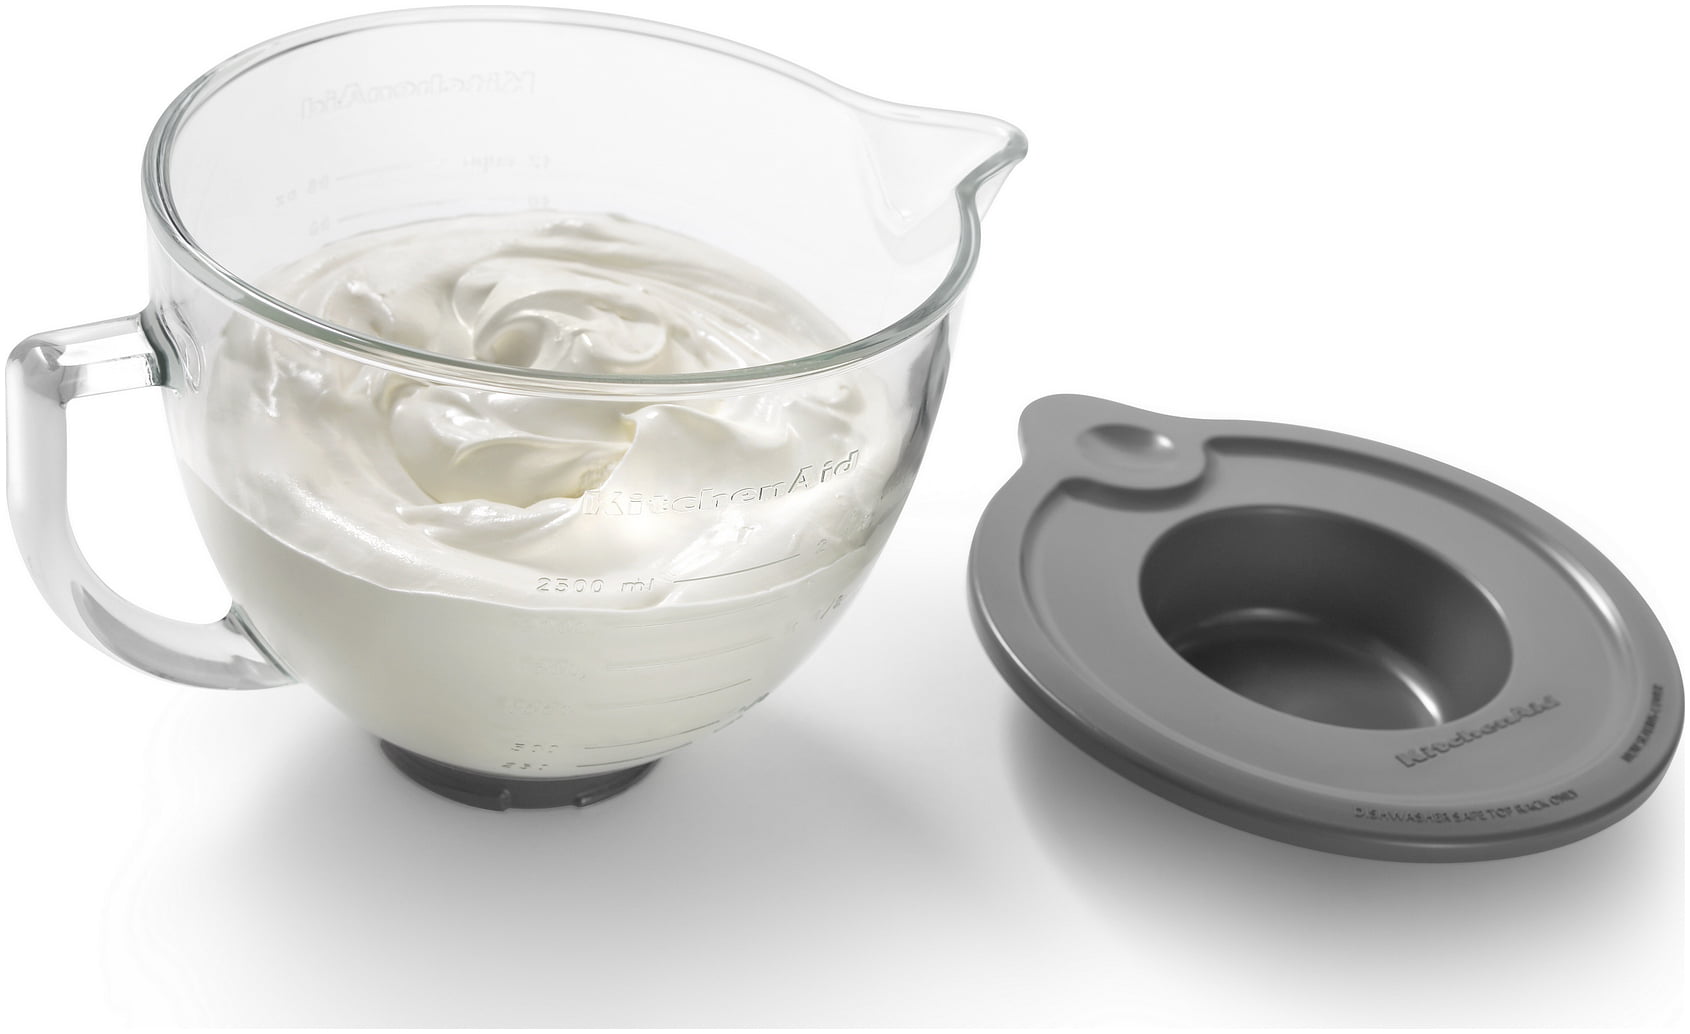 KitchenAid 5 Quart Tilt-Head Glass Bowl with Measurement Markings -  KSM5NLGB 